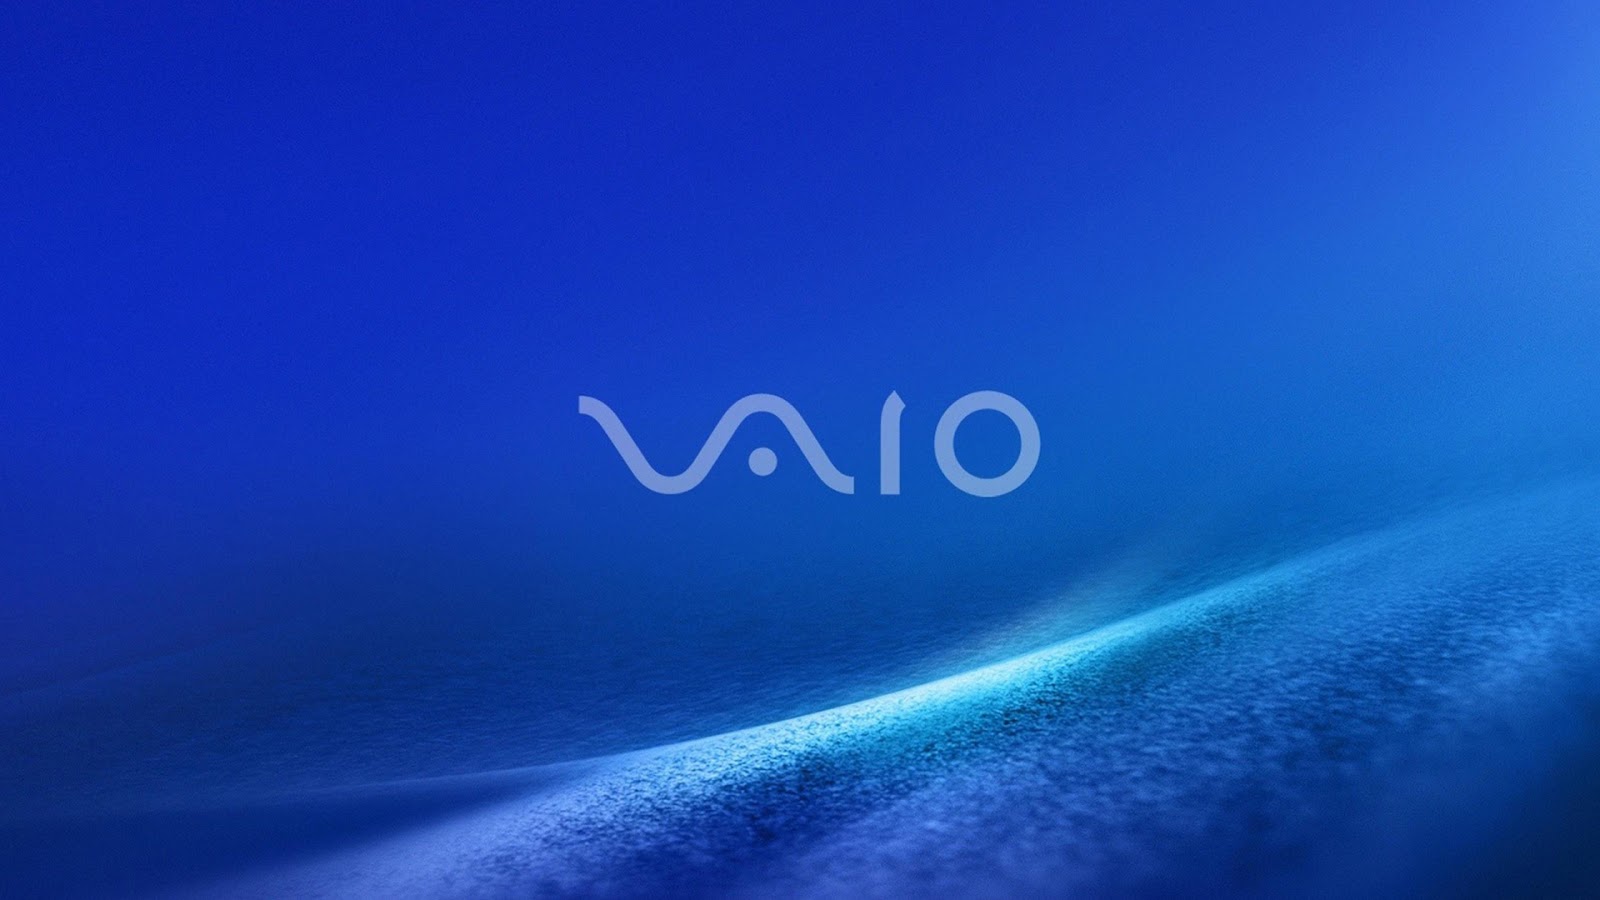 Sony Vaio Wallpaper 1080p